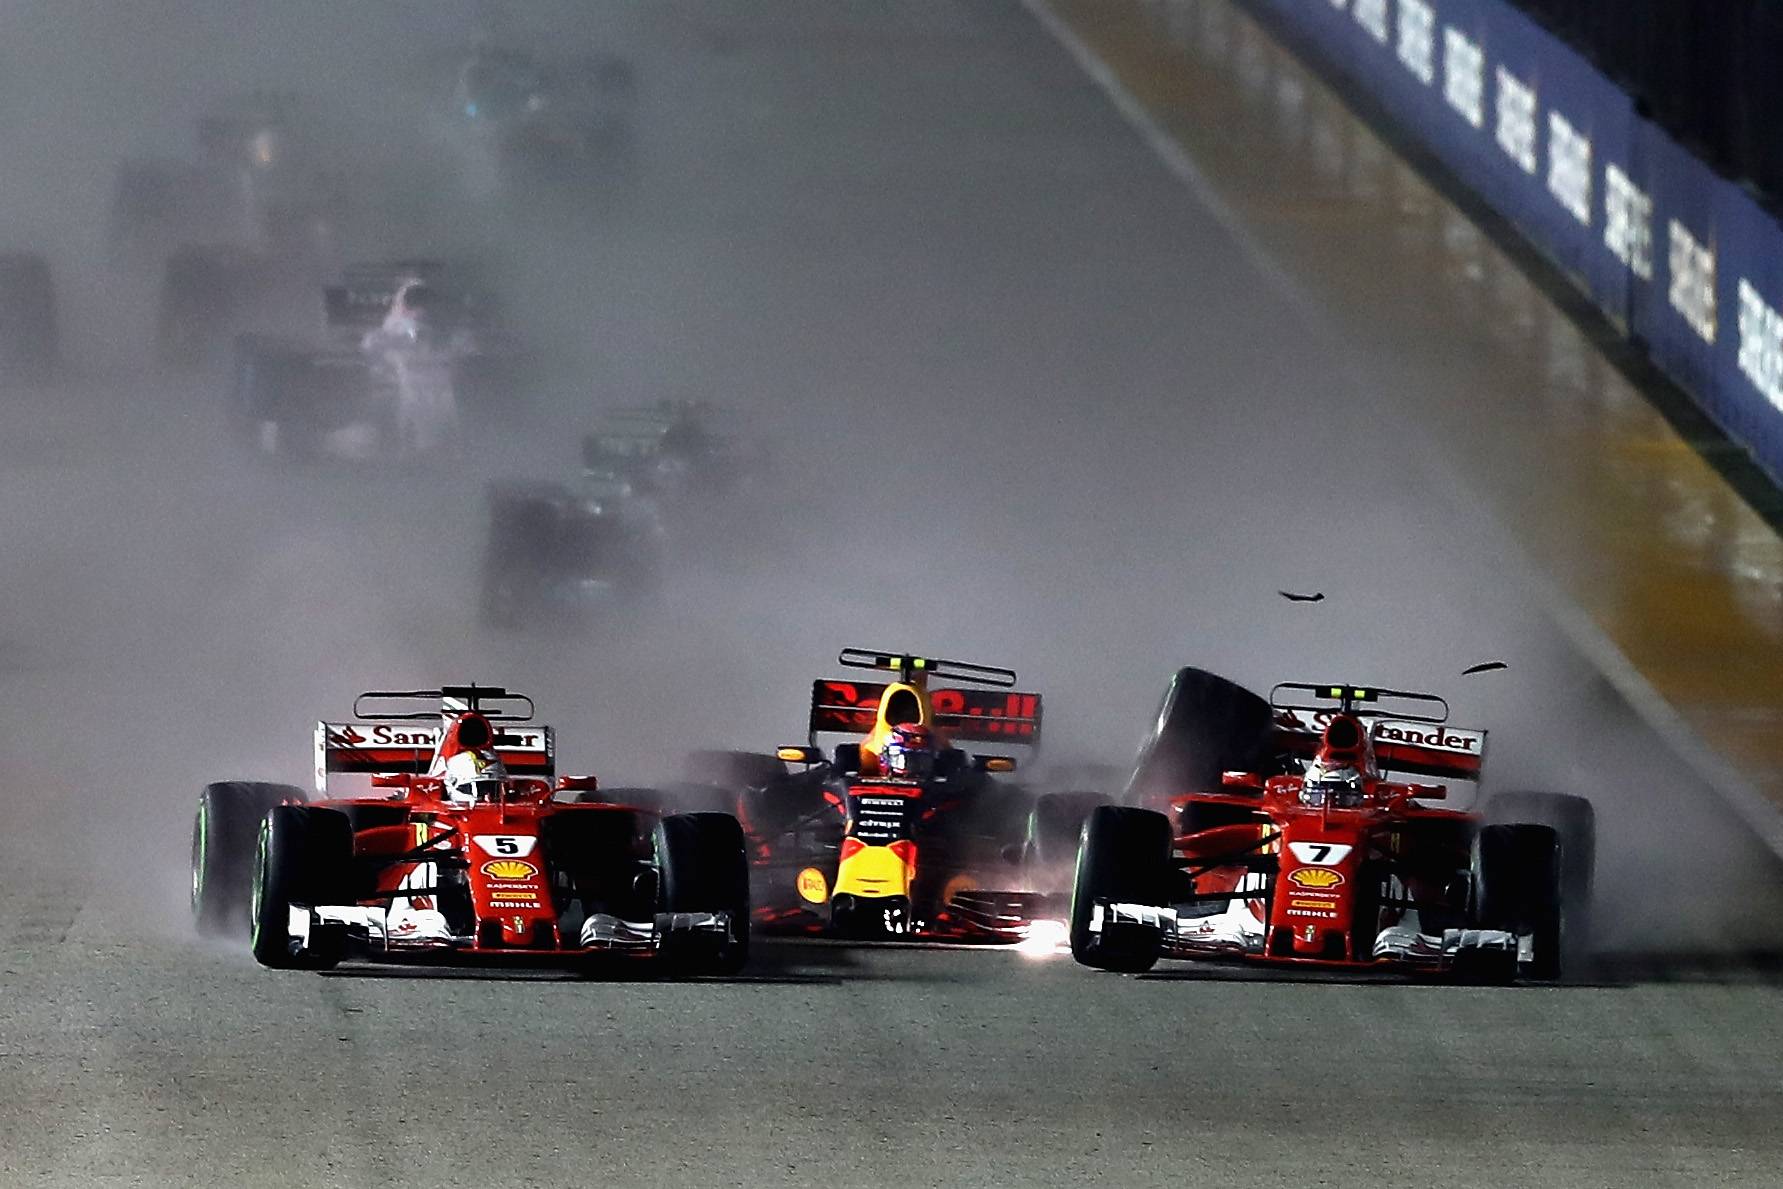 Sebastian Vettel, Max Verstappen & Kimi Raikkonen crash in Singapore